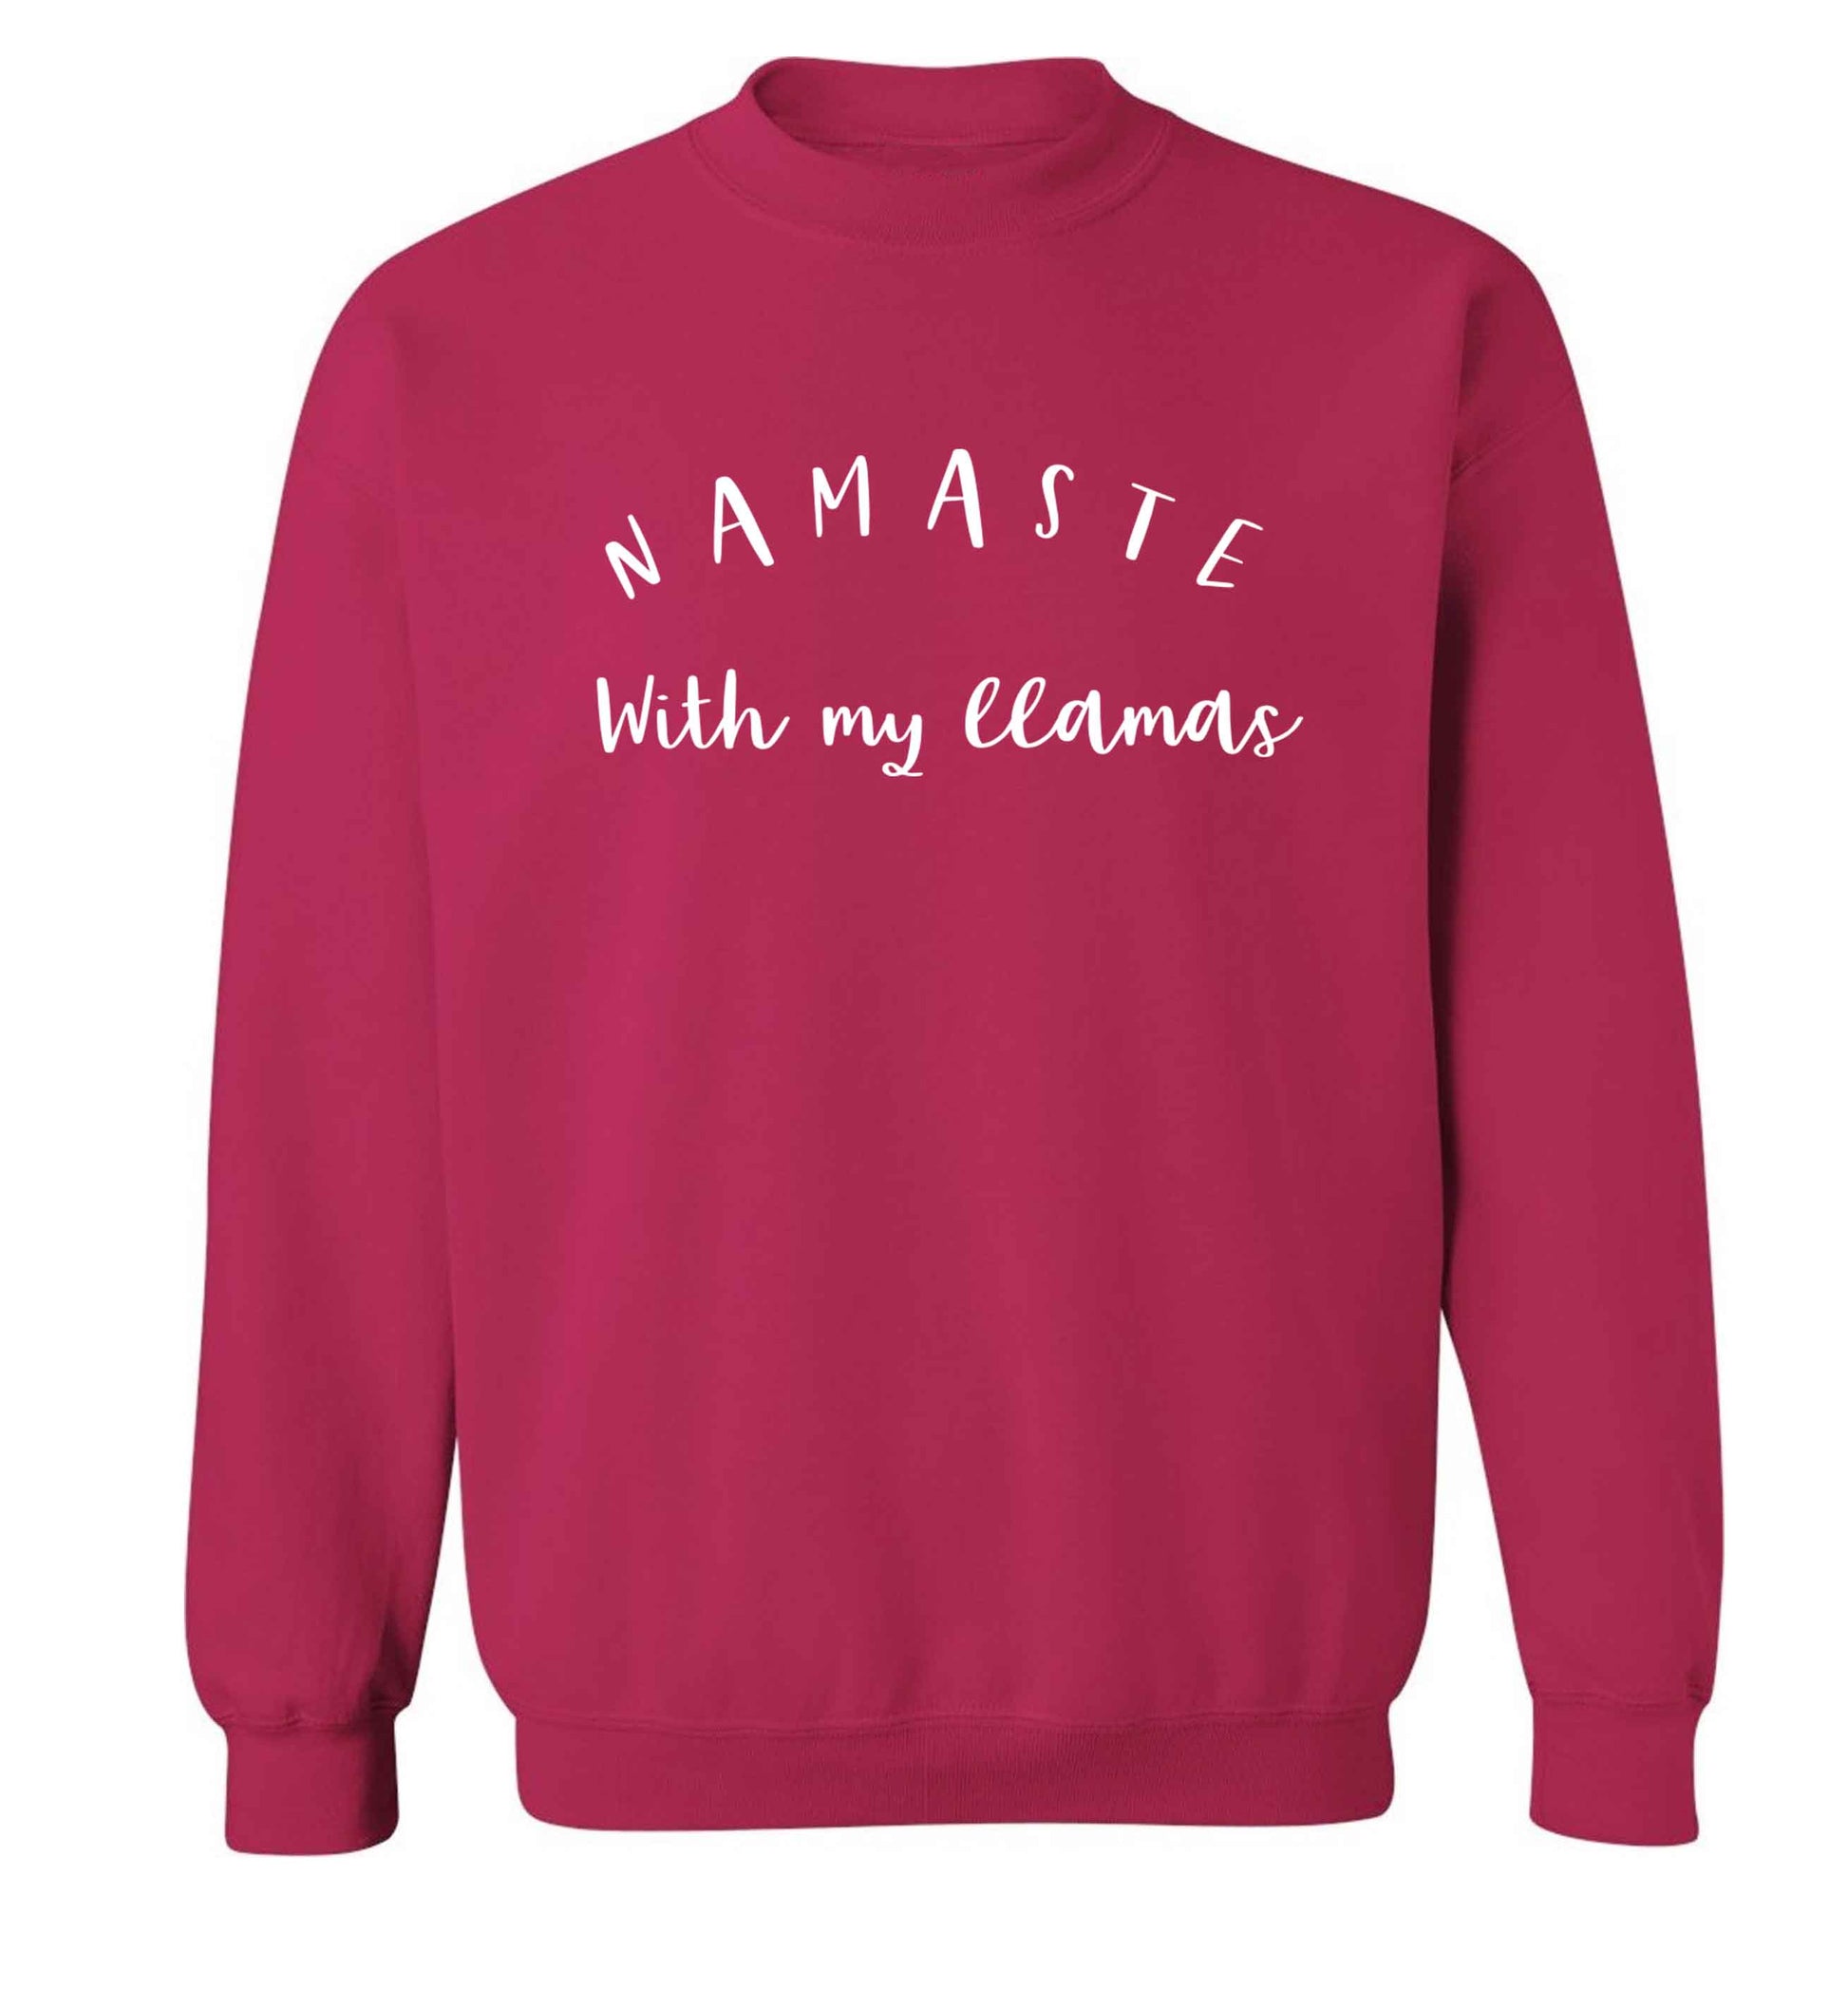 Namaste with my llamas Adult's unisex pink Sweater 2XL